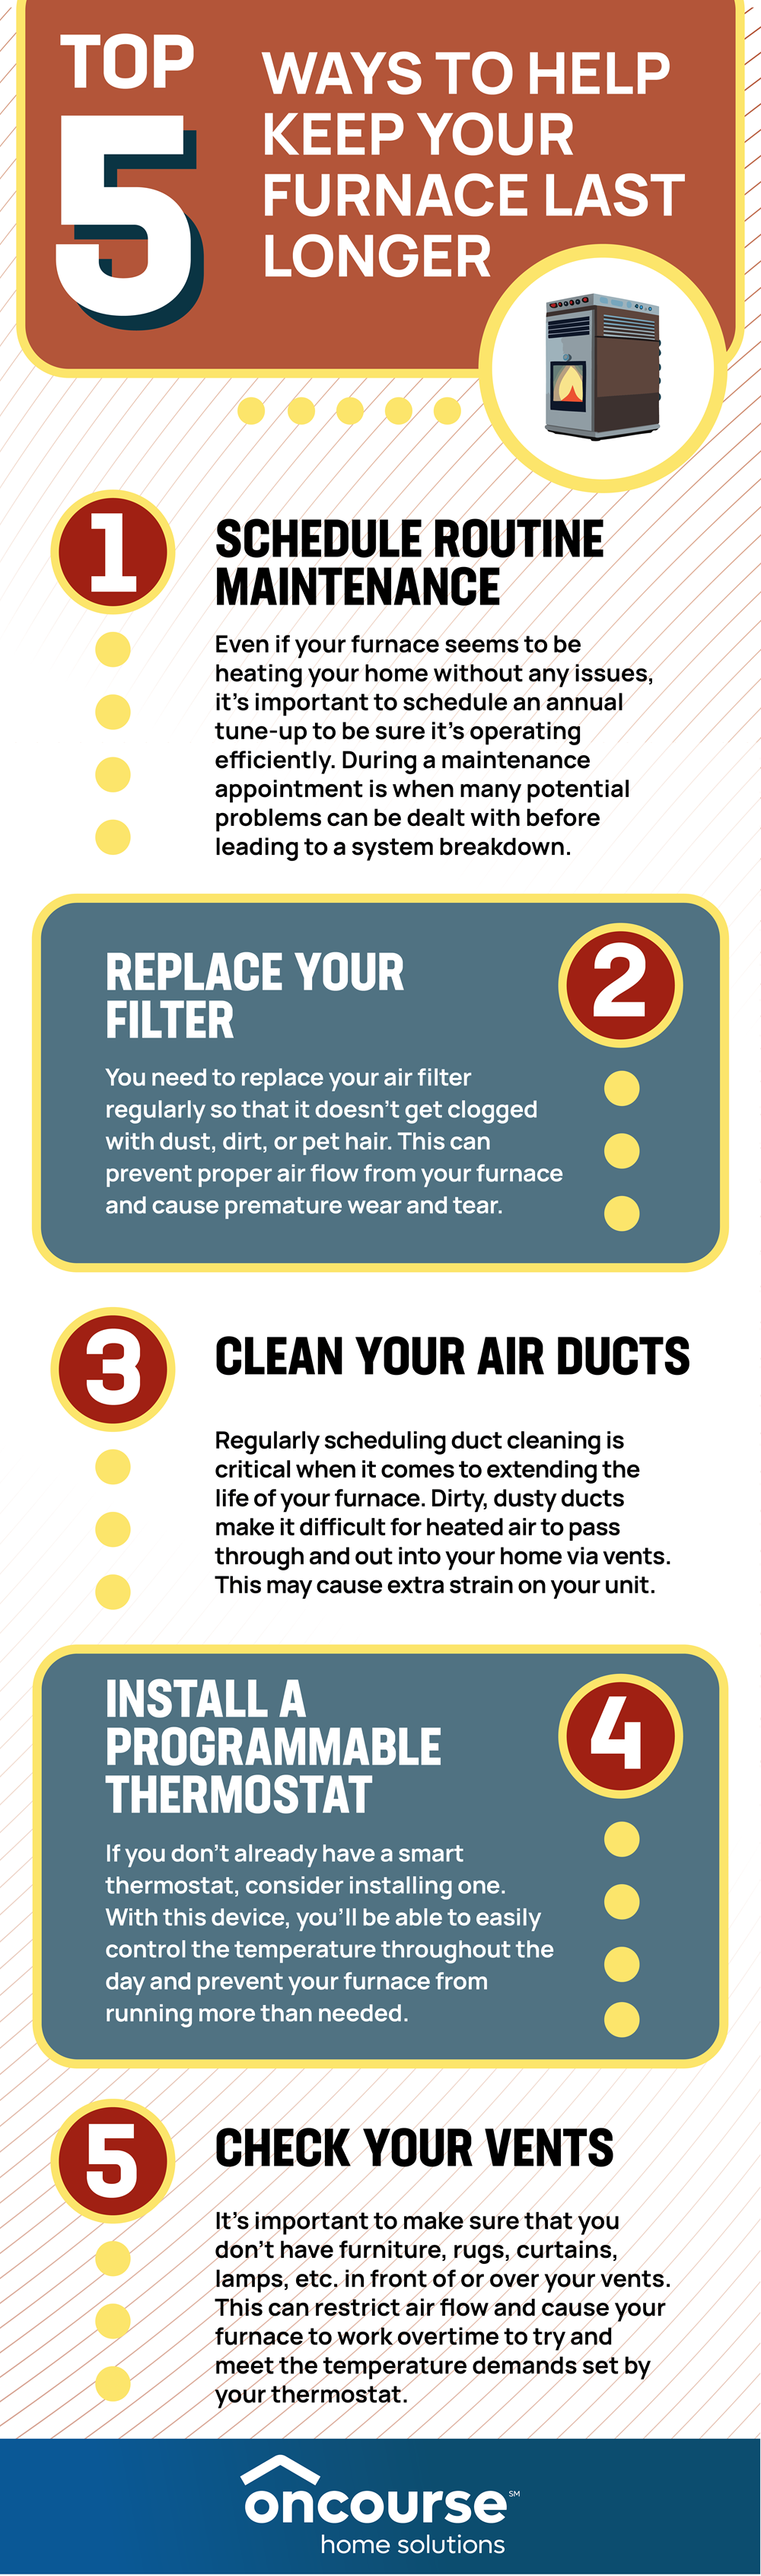 Top 5 Ways to Help Your Furnace Last Longer